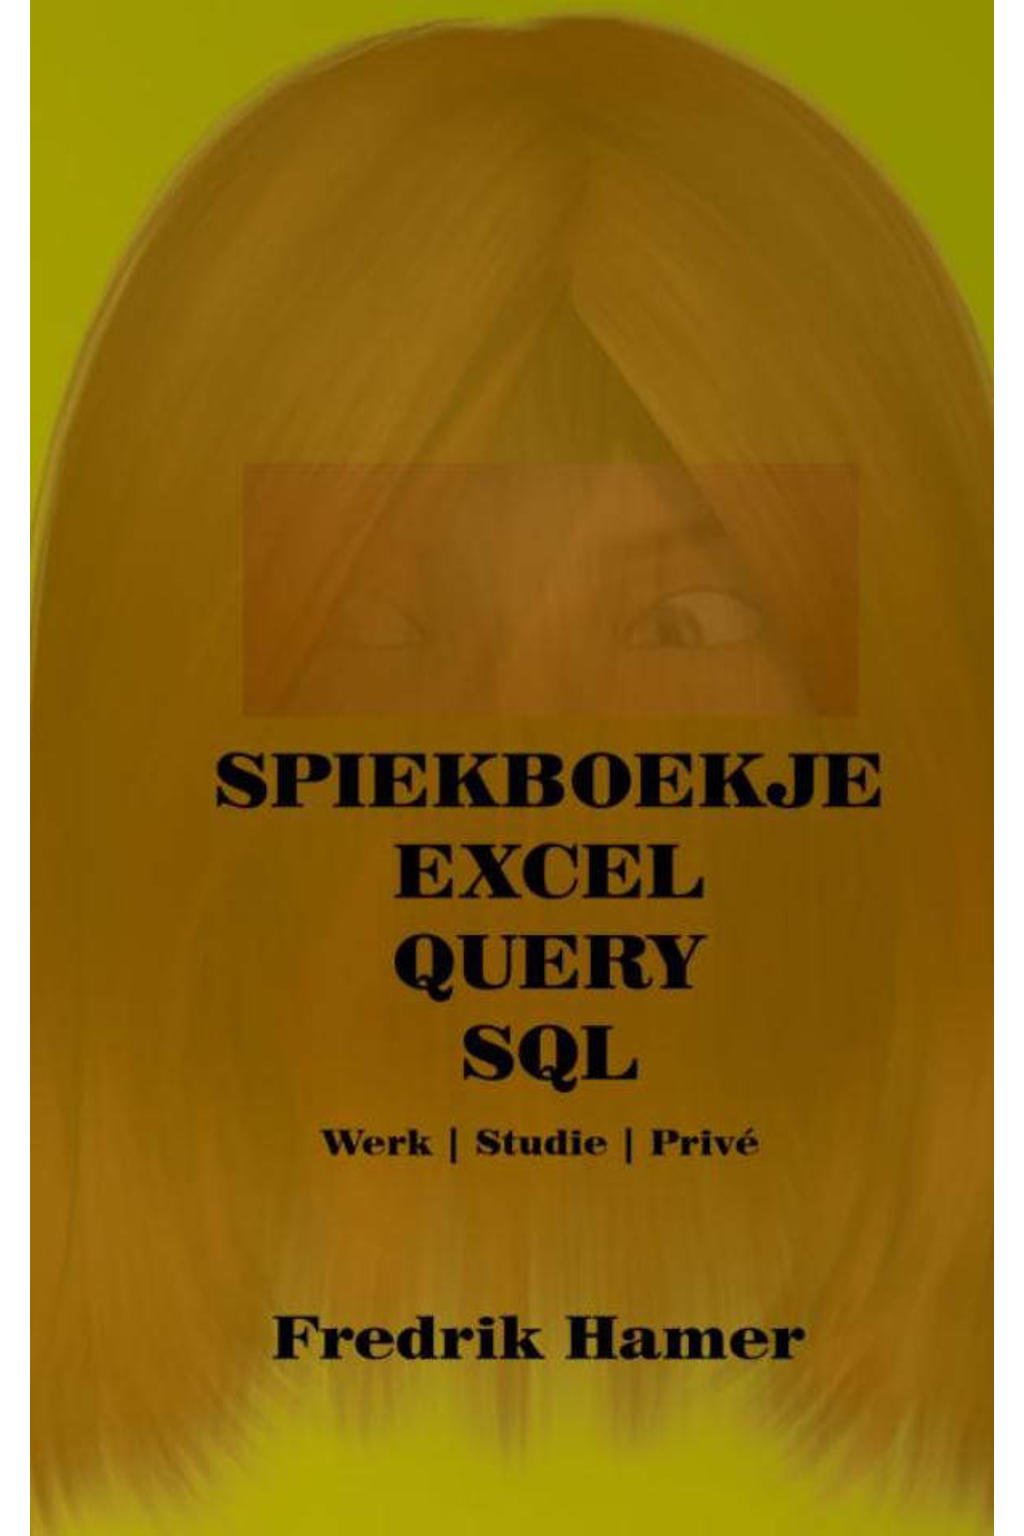 Spiekboekje Excel Query SQL - Fredrik Hamer